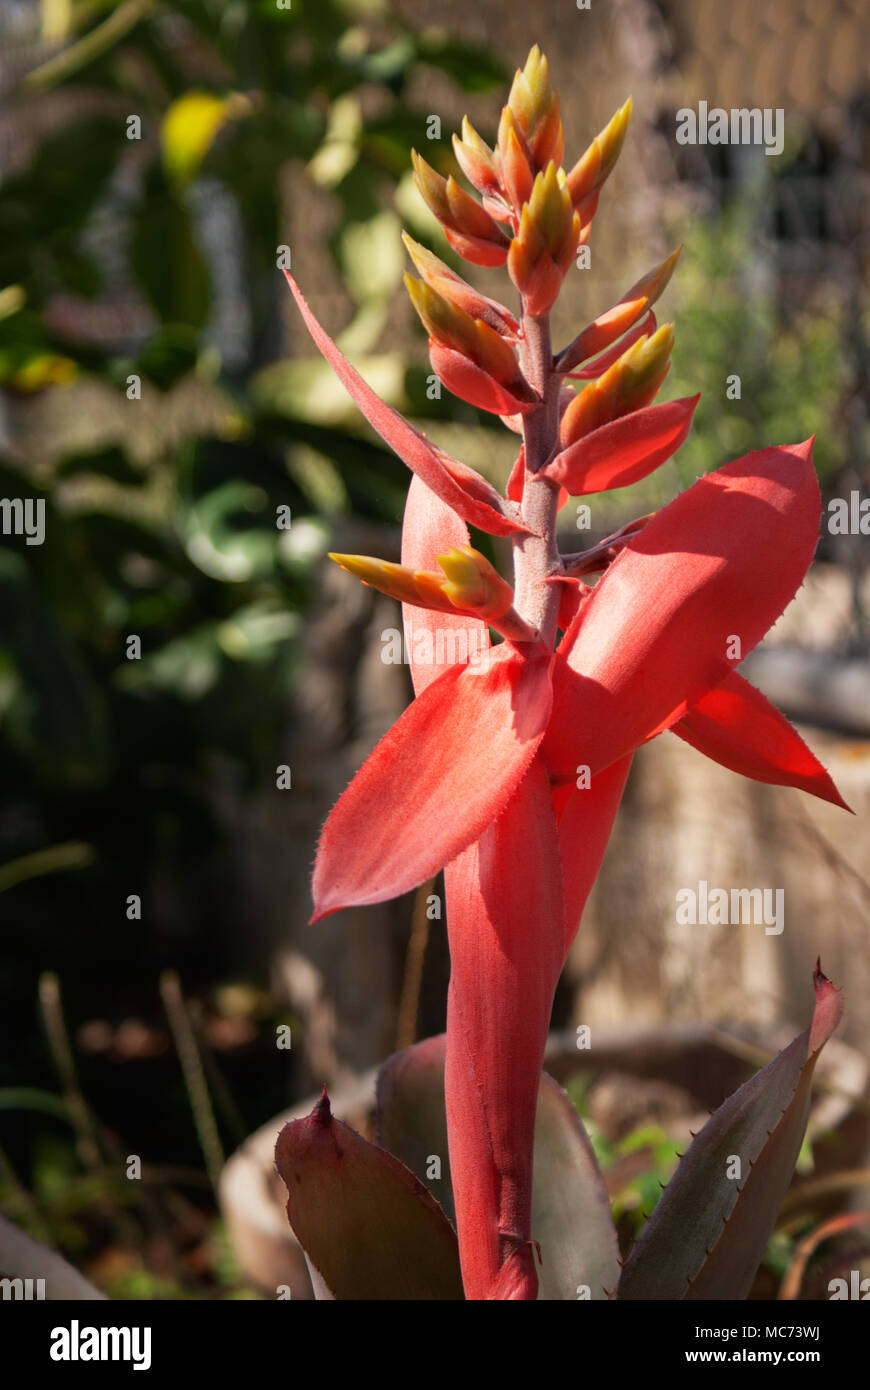 Closeup of a reddish Neoregelia bromeliad flower spike receiving sunlight. Stock Photo